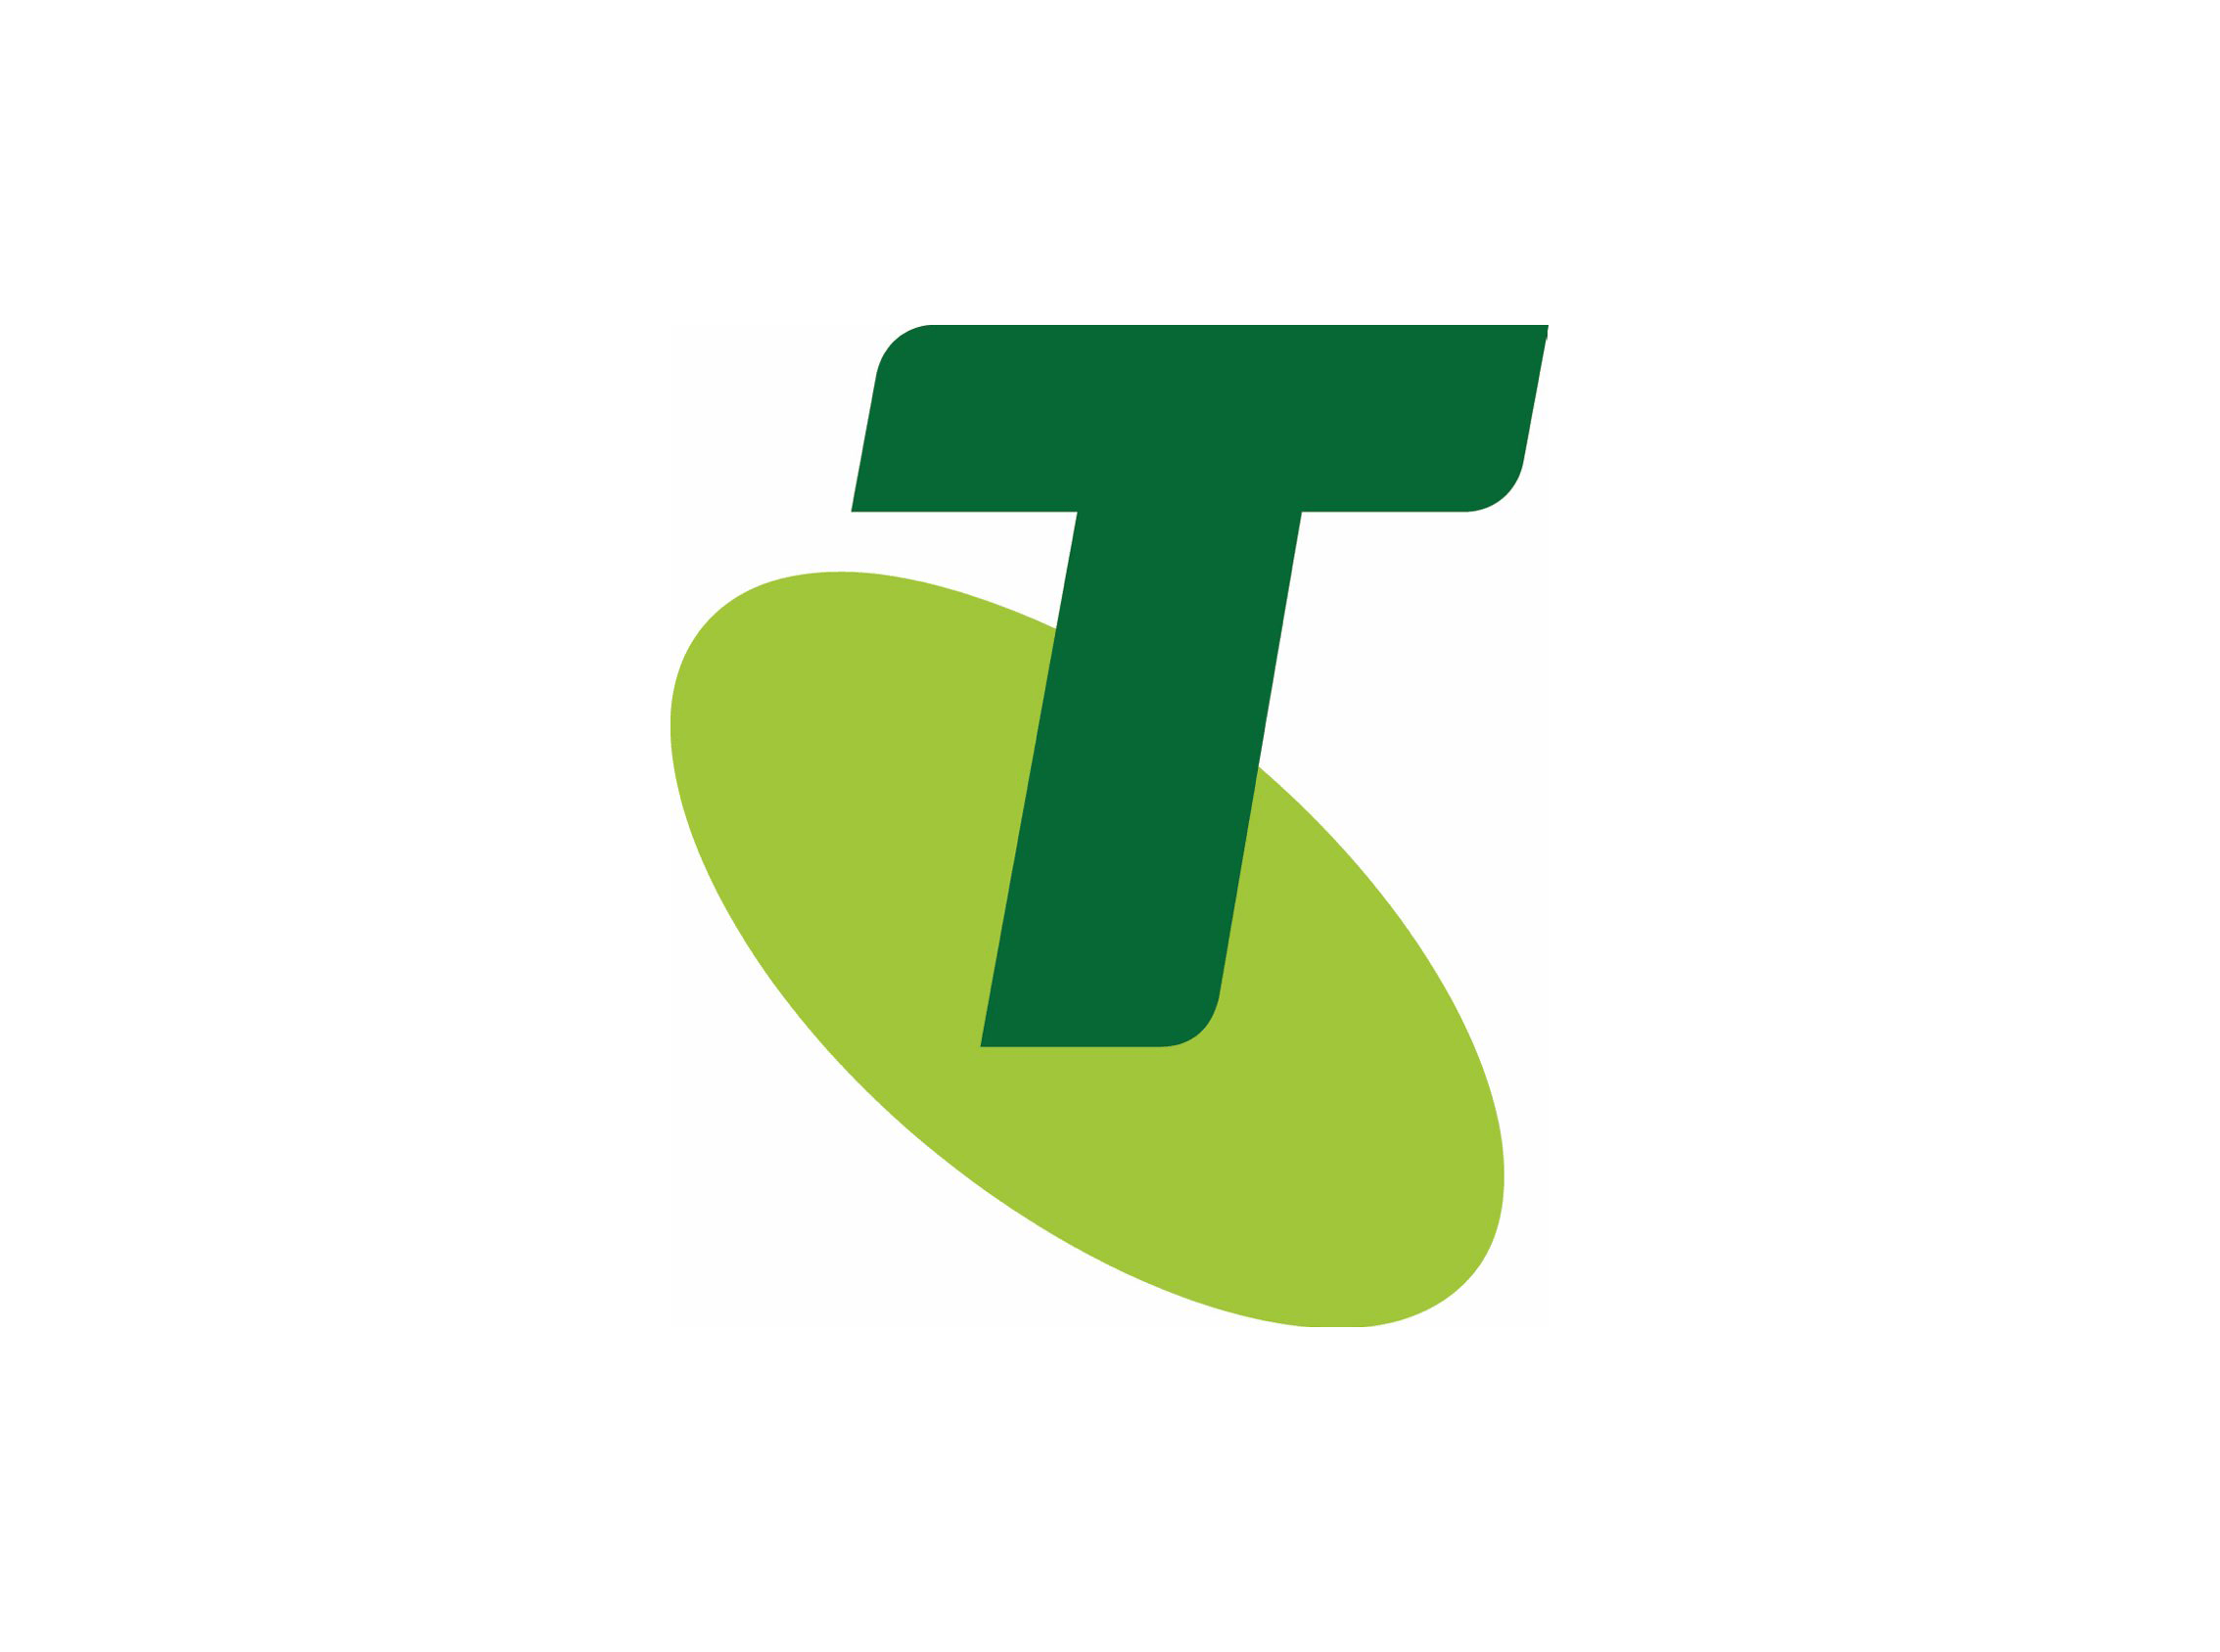 Telstra Logo - Telstra-logo-2011-green - P-TECH